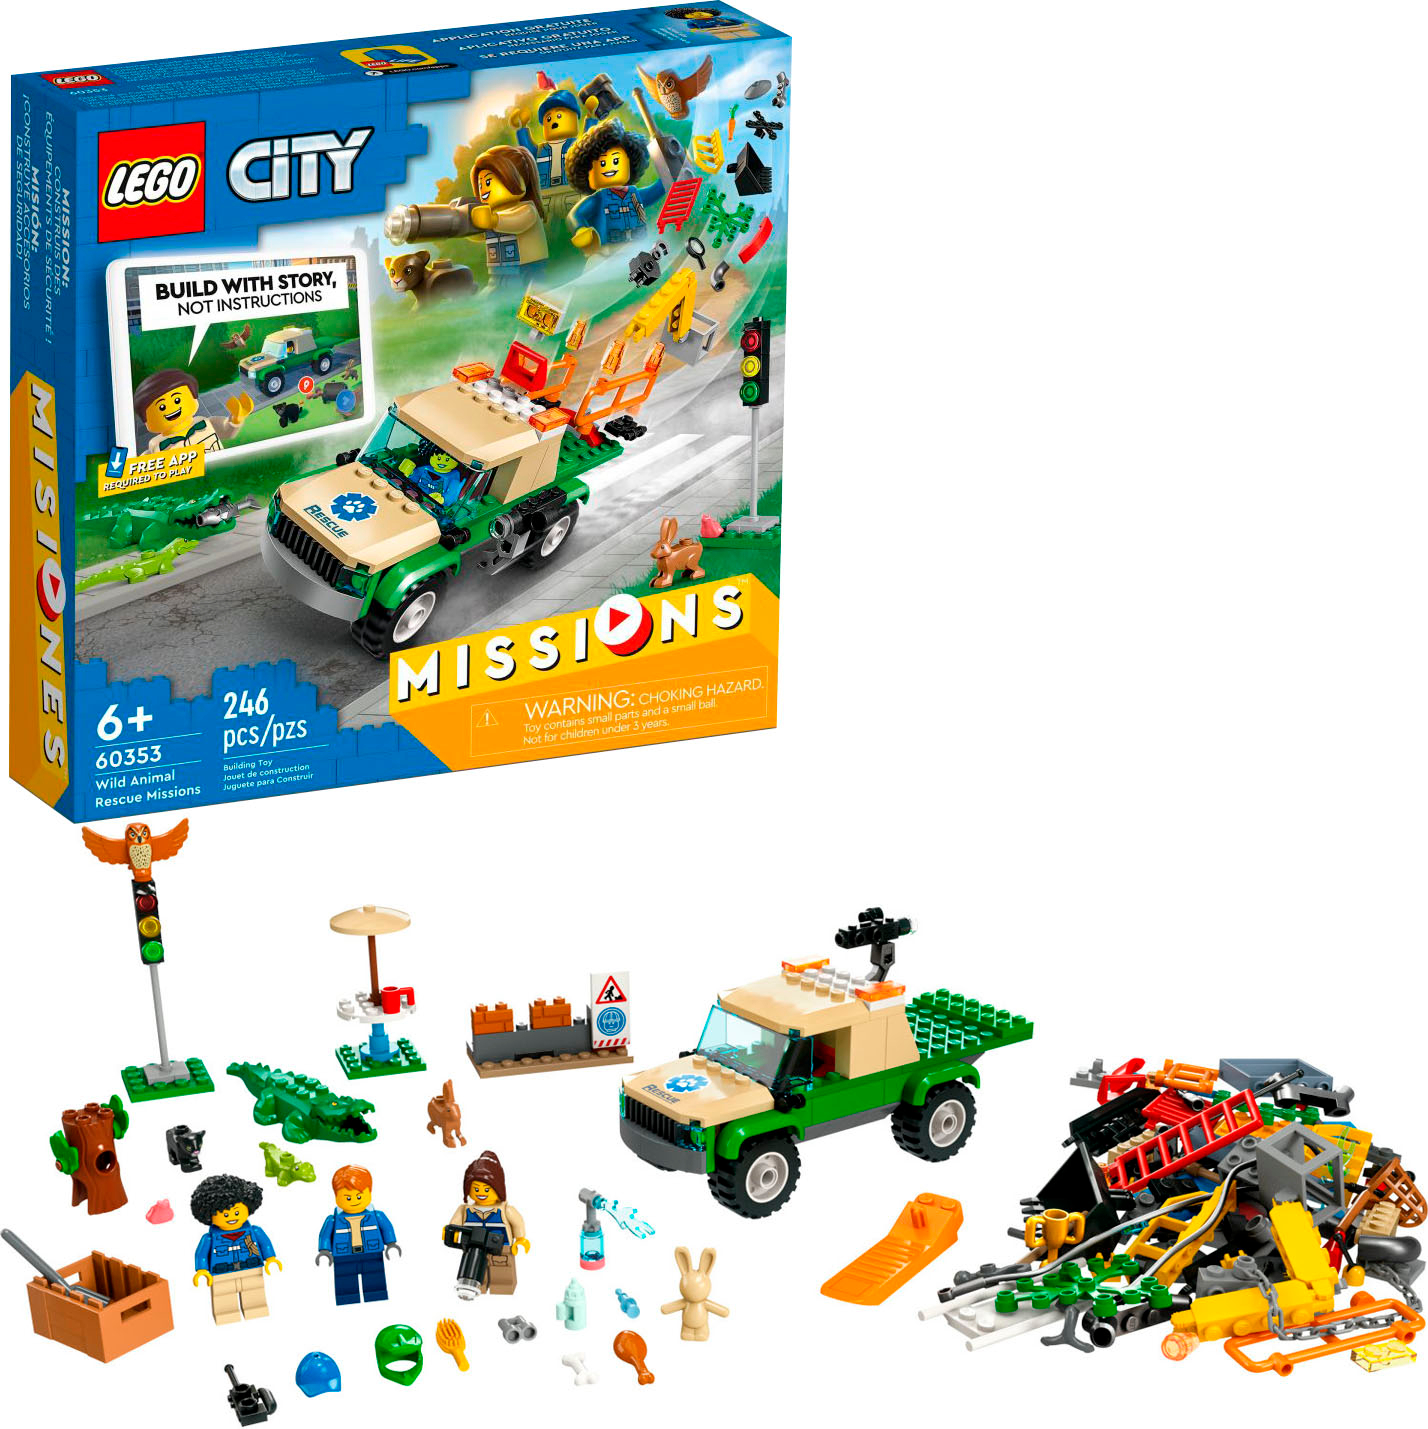 Lego Technic John Deere 9620r 4wd Tractor Farm Toy 42136 : Target